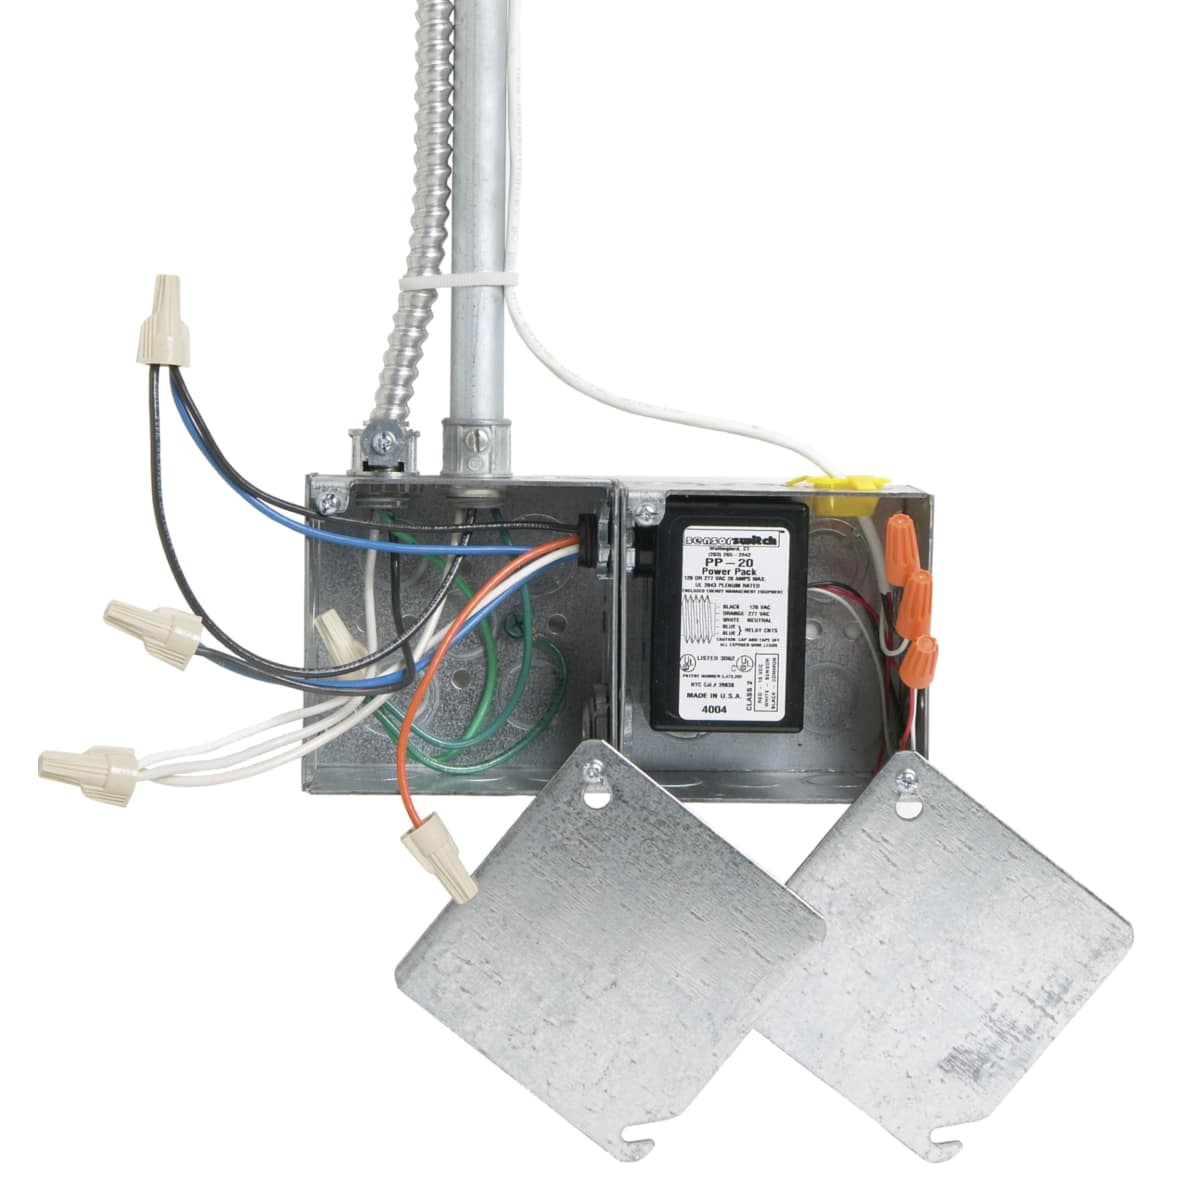 ZENCP Series PVC Lithium-ion Battery Temperature Monitoring Sensor